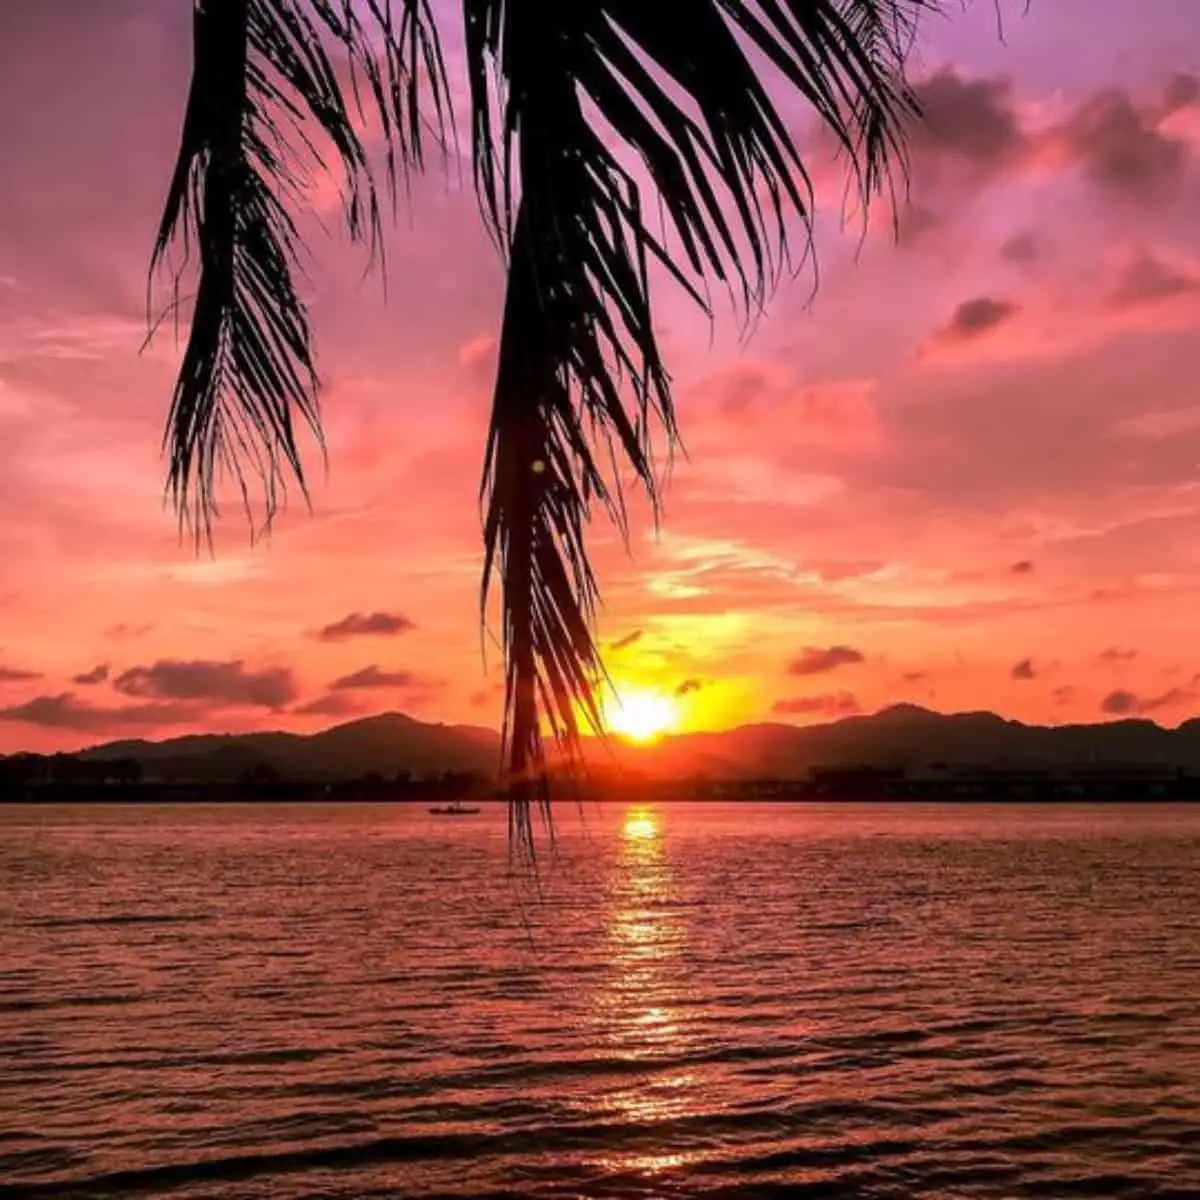 Beautiful sunset view at Pulau Jerejak penang